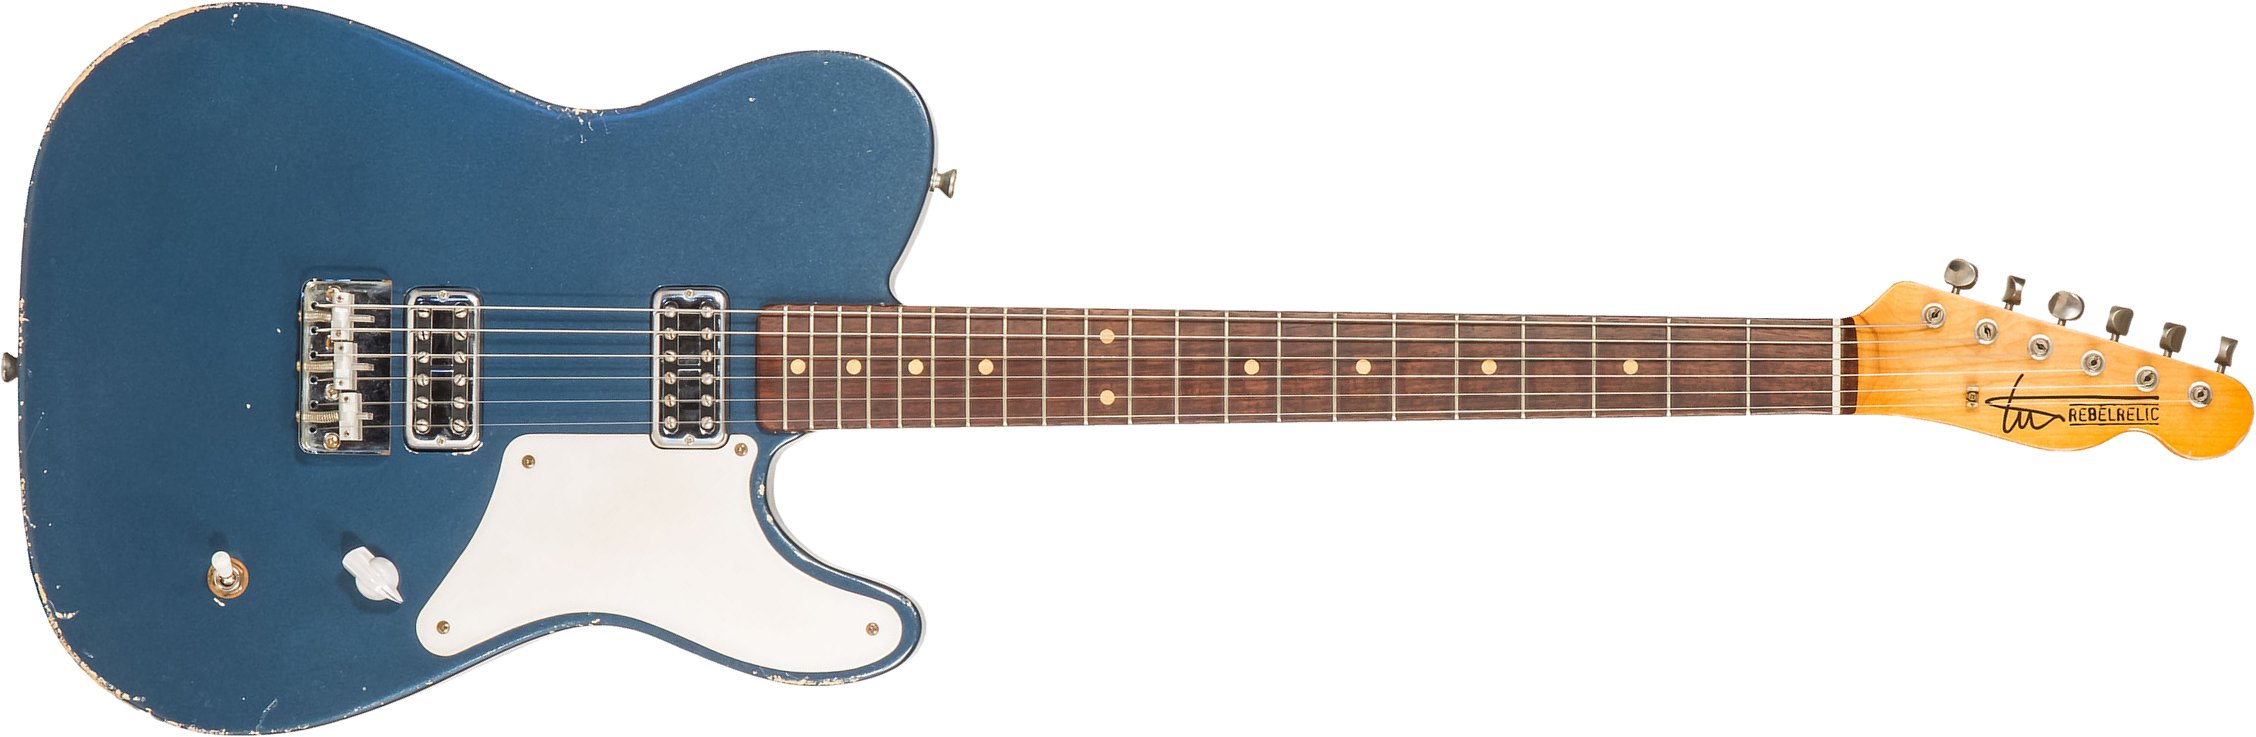 Rebelrelic Carmelita 2h Tv Jones Ht Rw #62165 - Medium Aged Lake Placid Blue - Tel shape electric guitar - Main picture